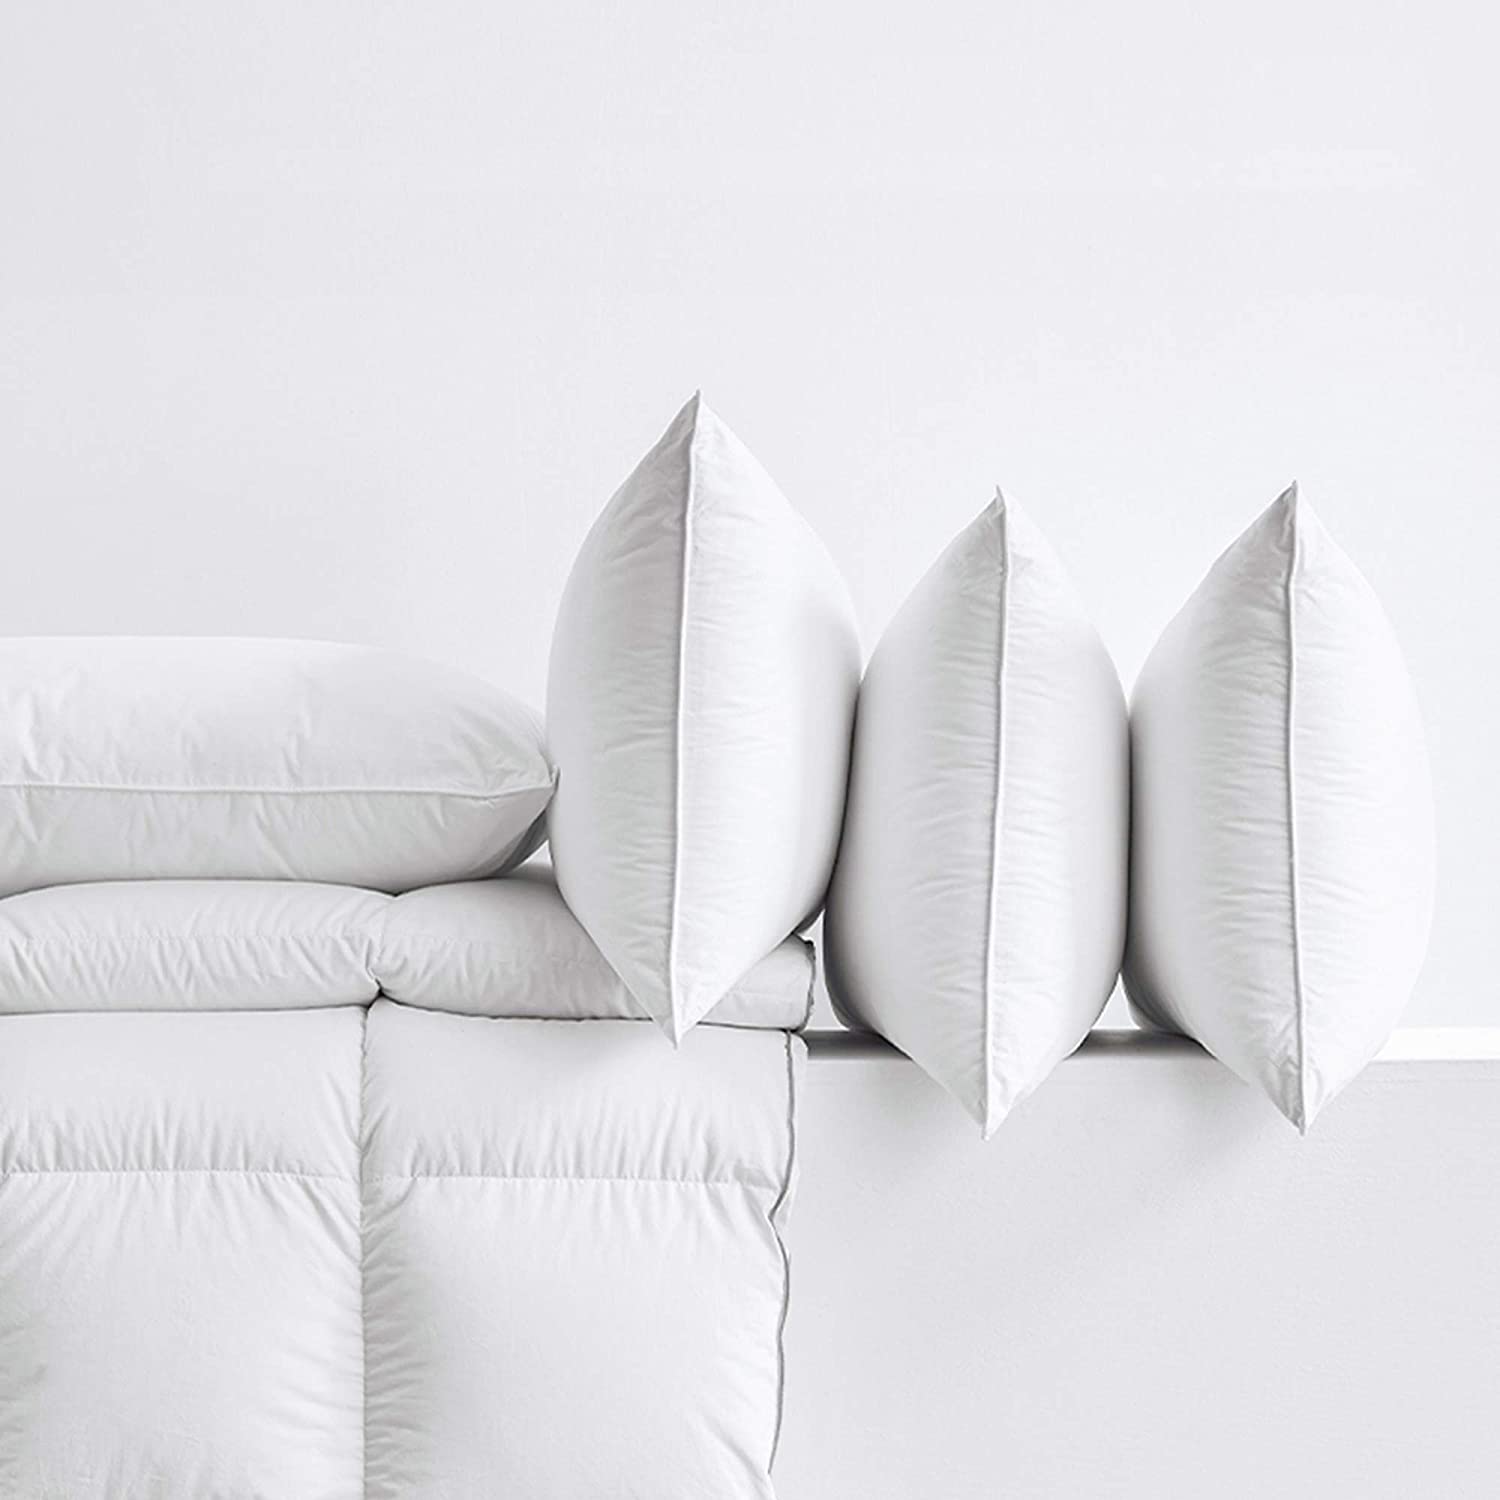 soft plush pillows